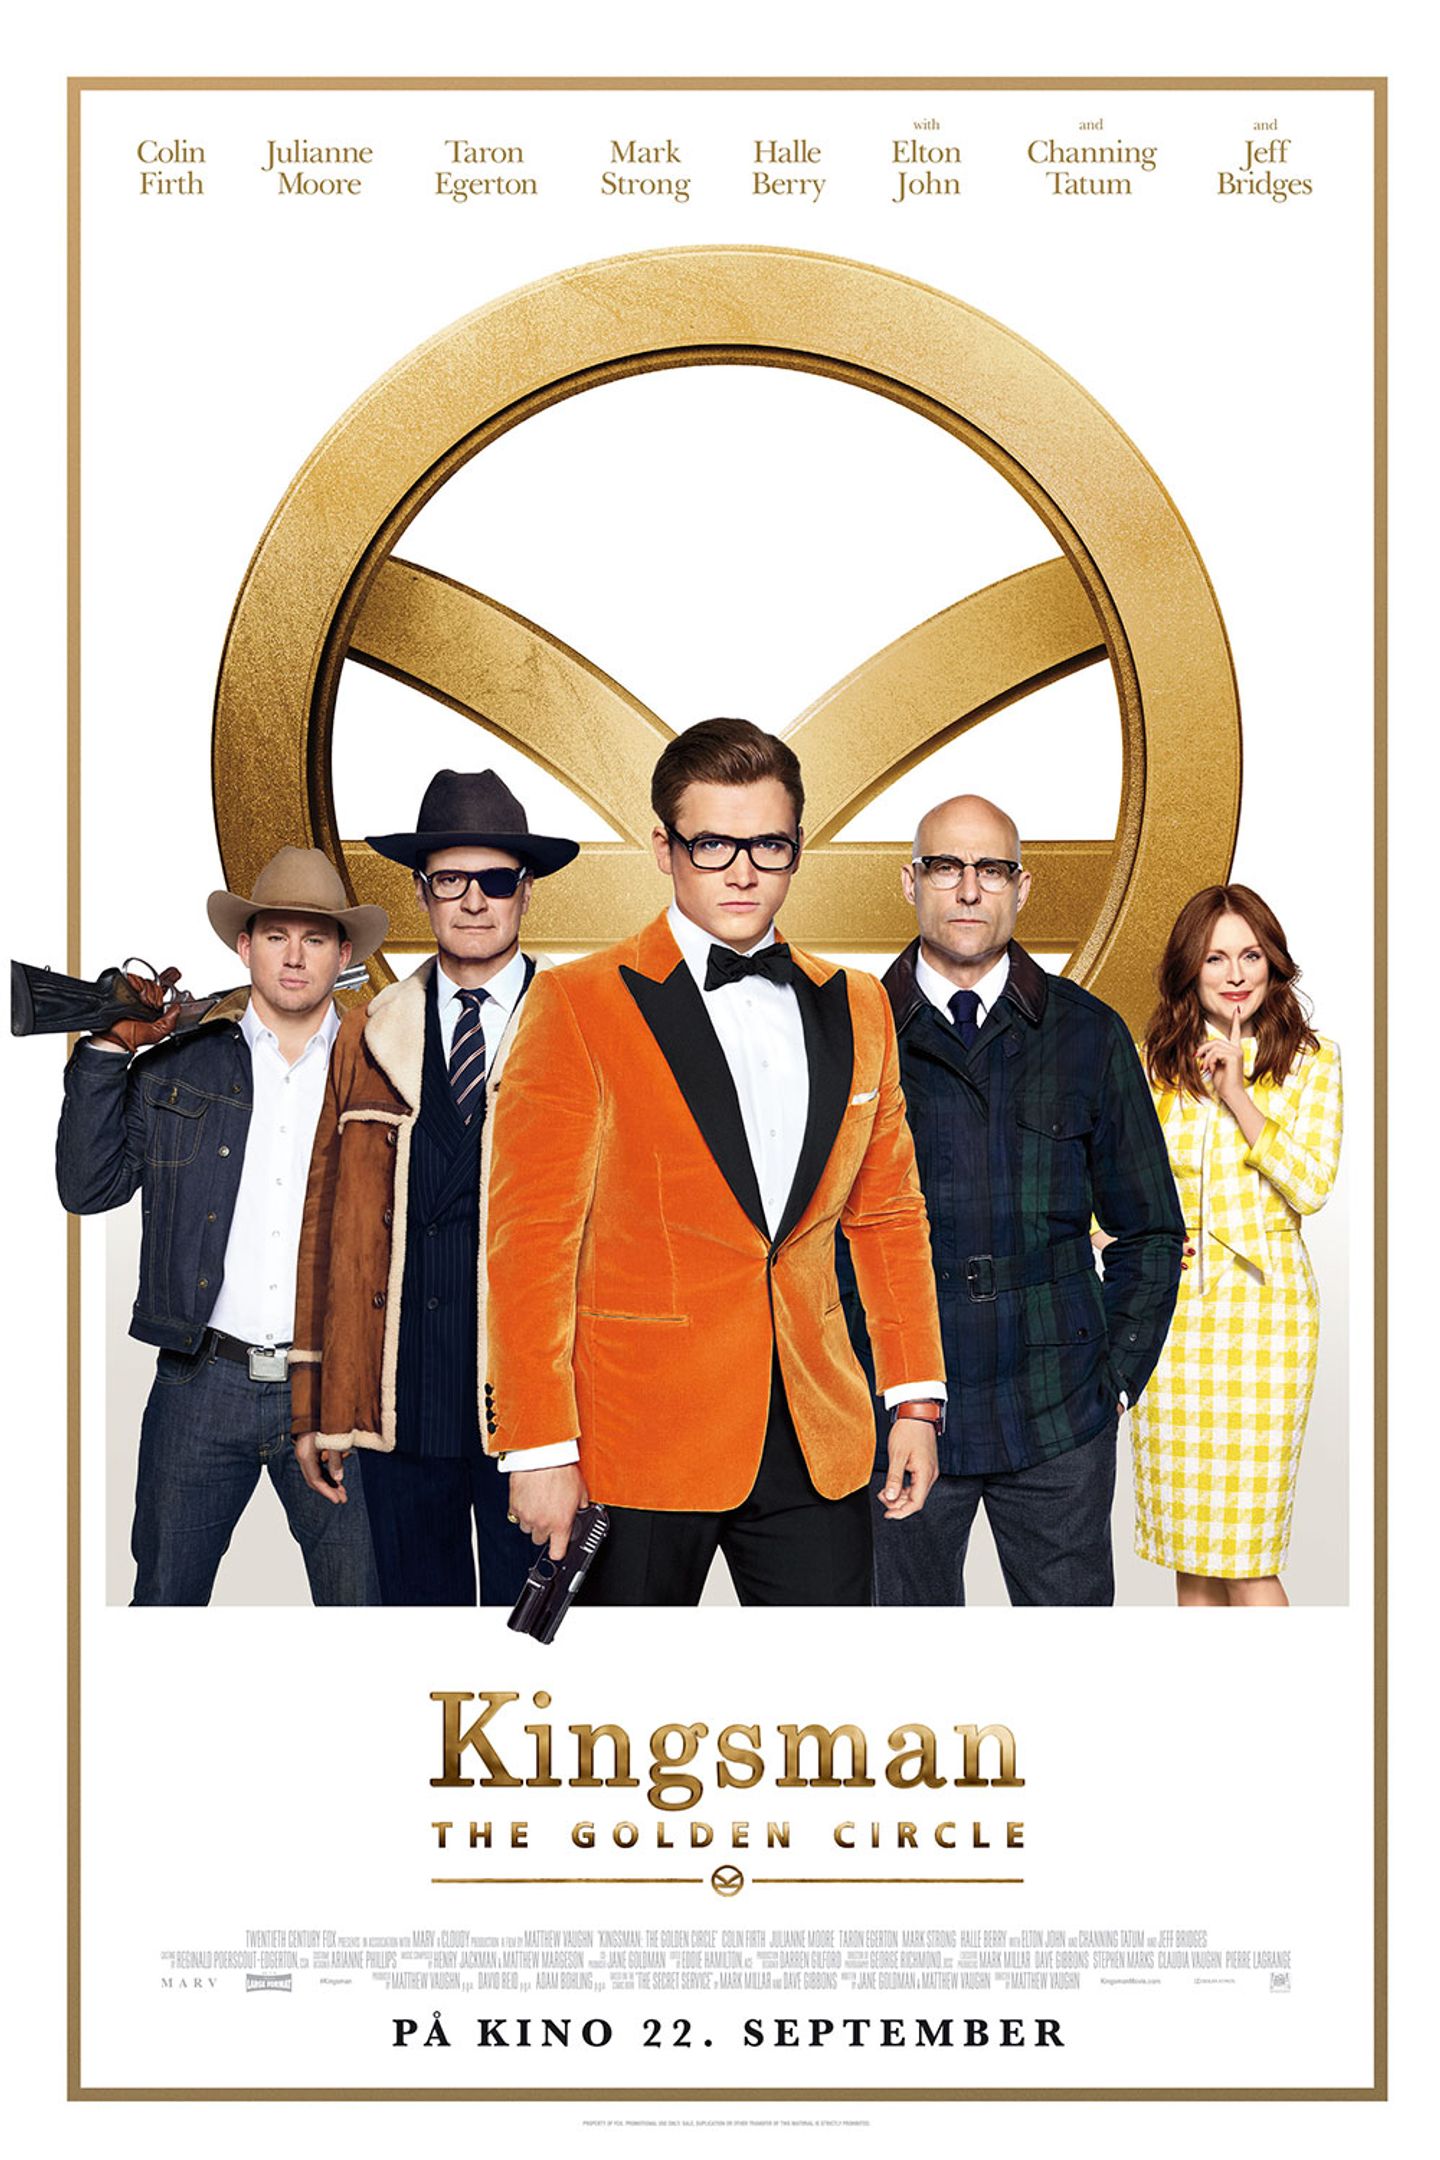 Plakat for 'Kingsman: The Golden Circle'